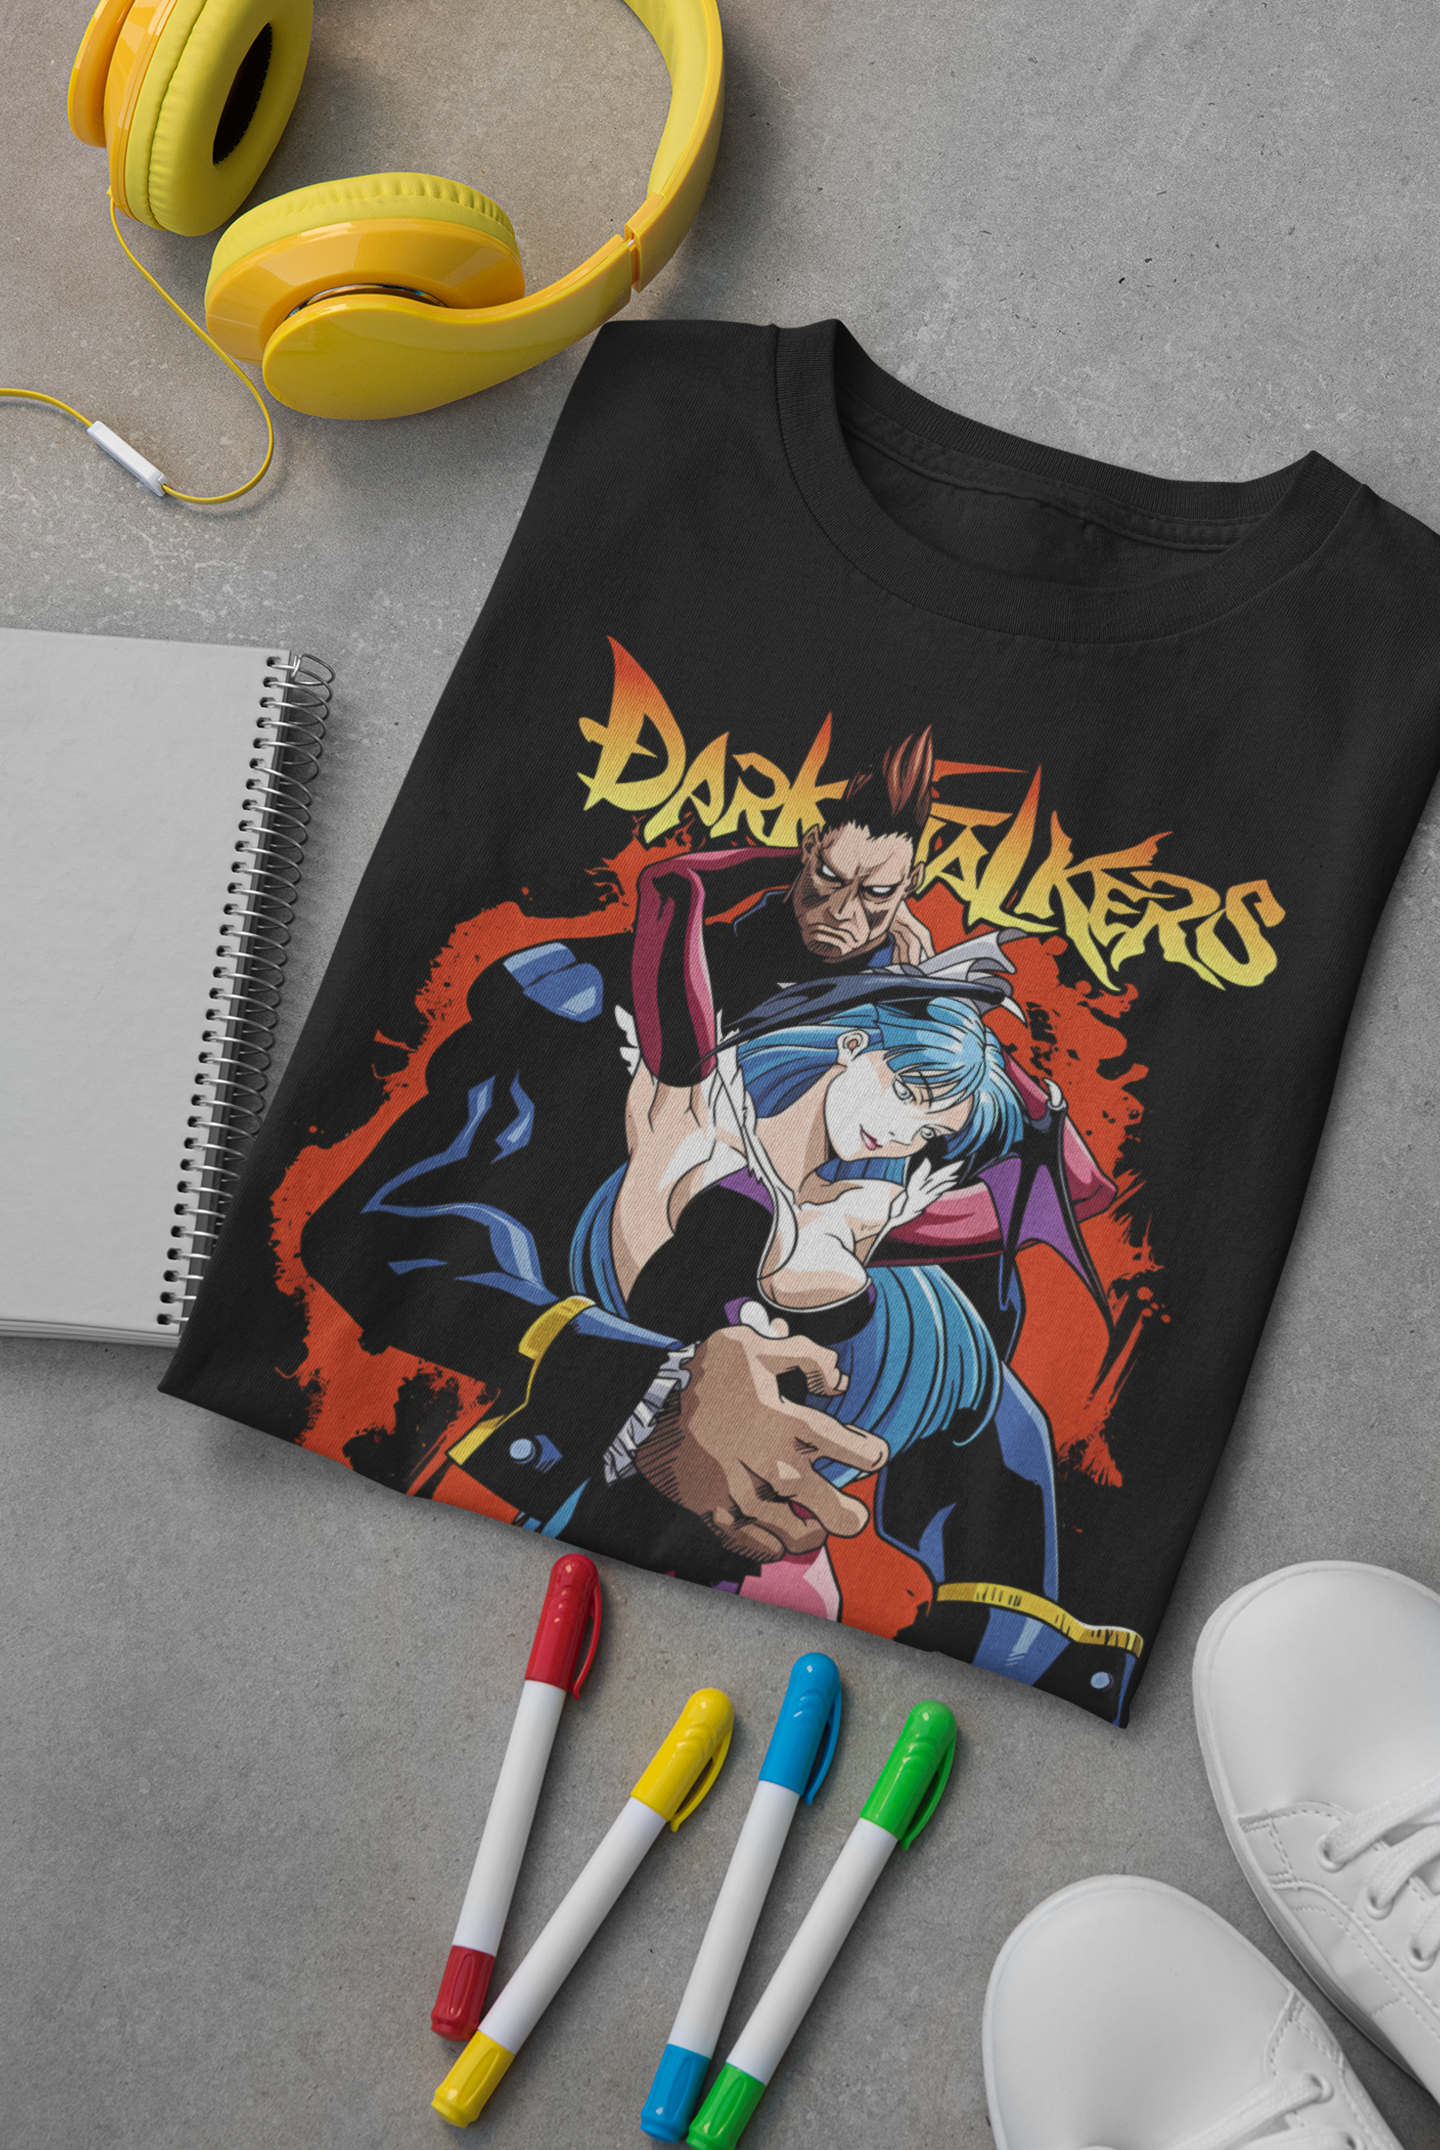 Night Warriors: Darkstalkers' Revenge T-Shirt